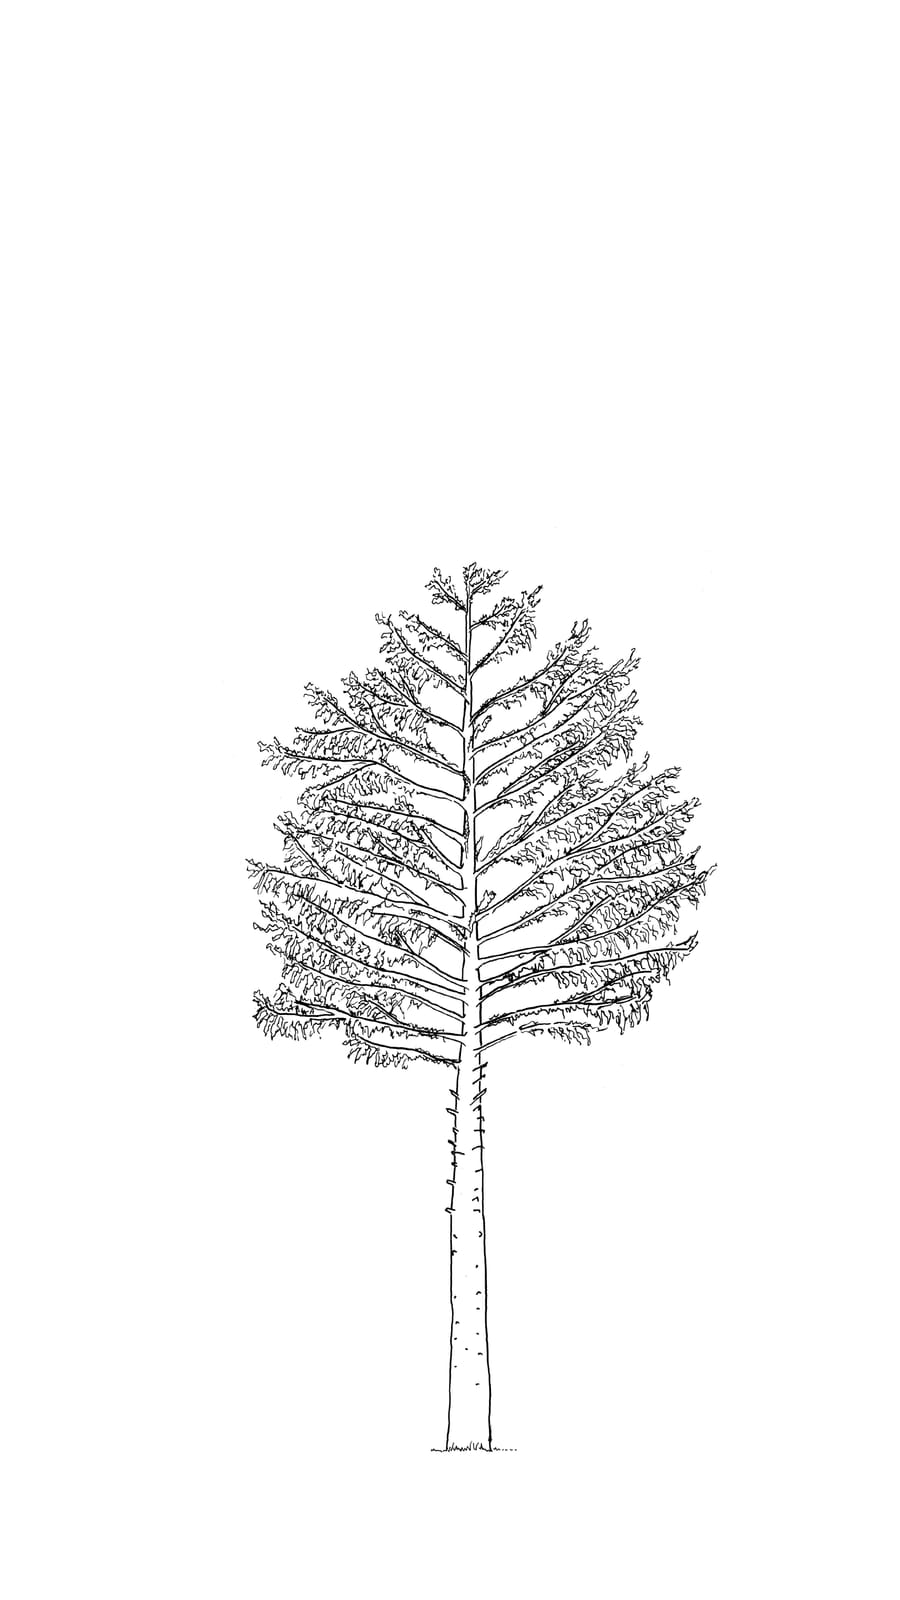 Black line sketch of a 30 year old douglas fir tree